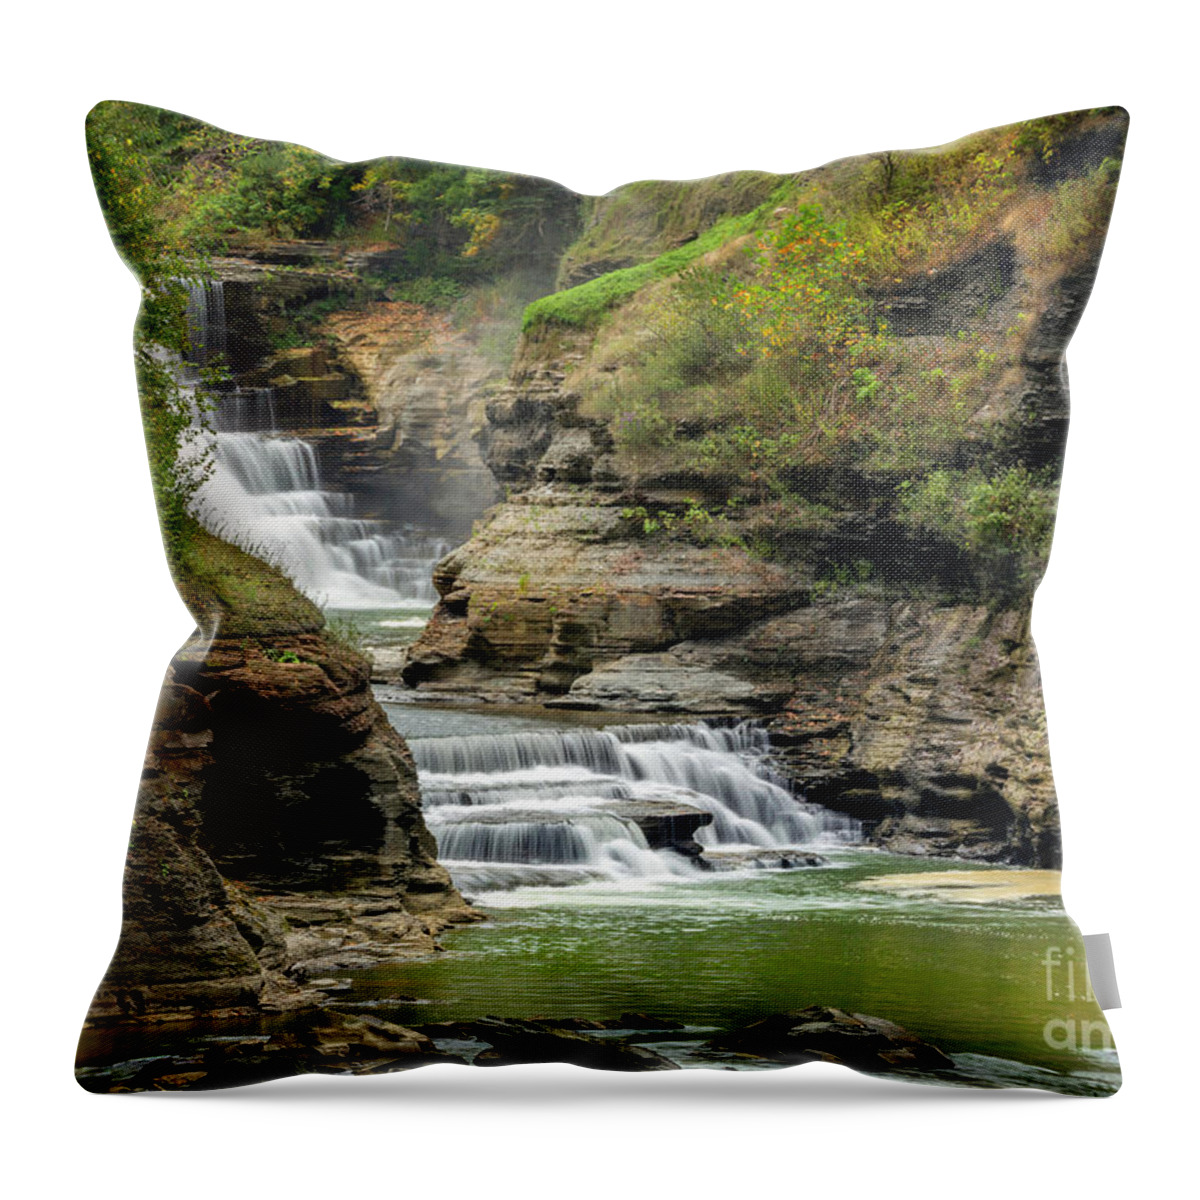 Lower Falls Of Letchworth Throw Pillow featuring the photograph Lower Falls of Letchworh by Karen Jorstad